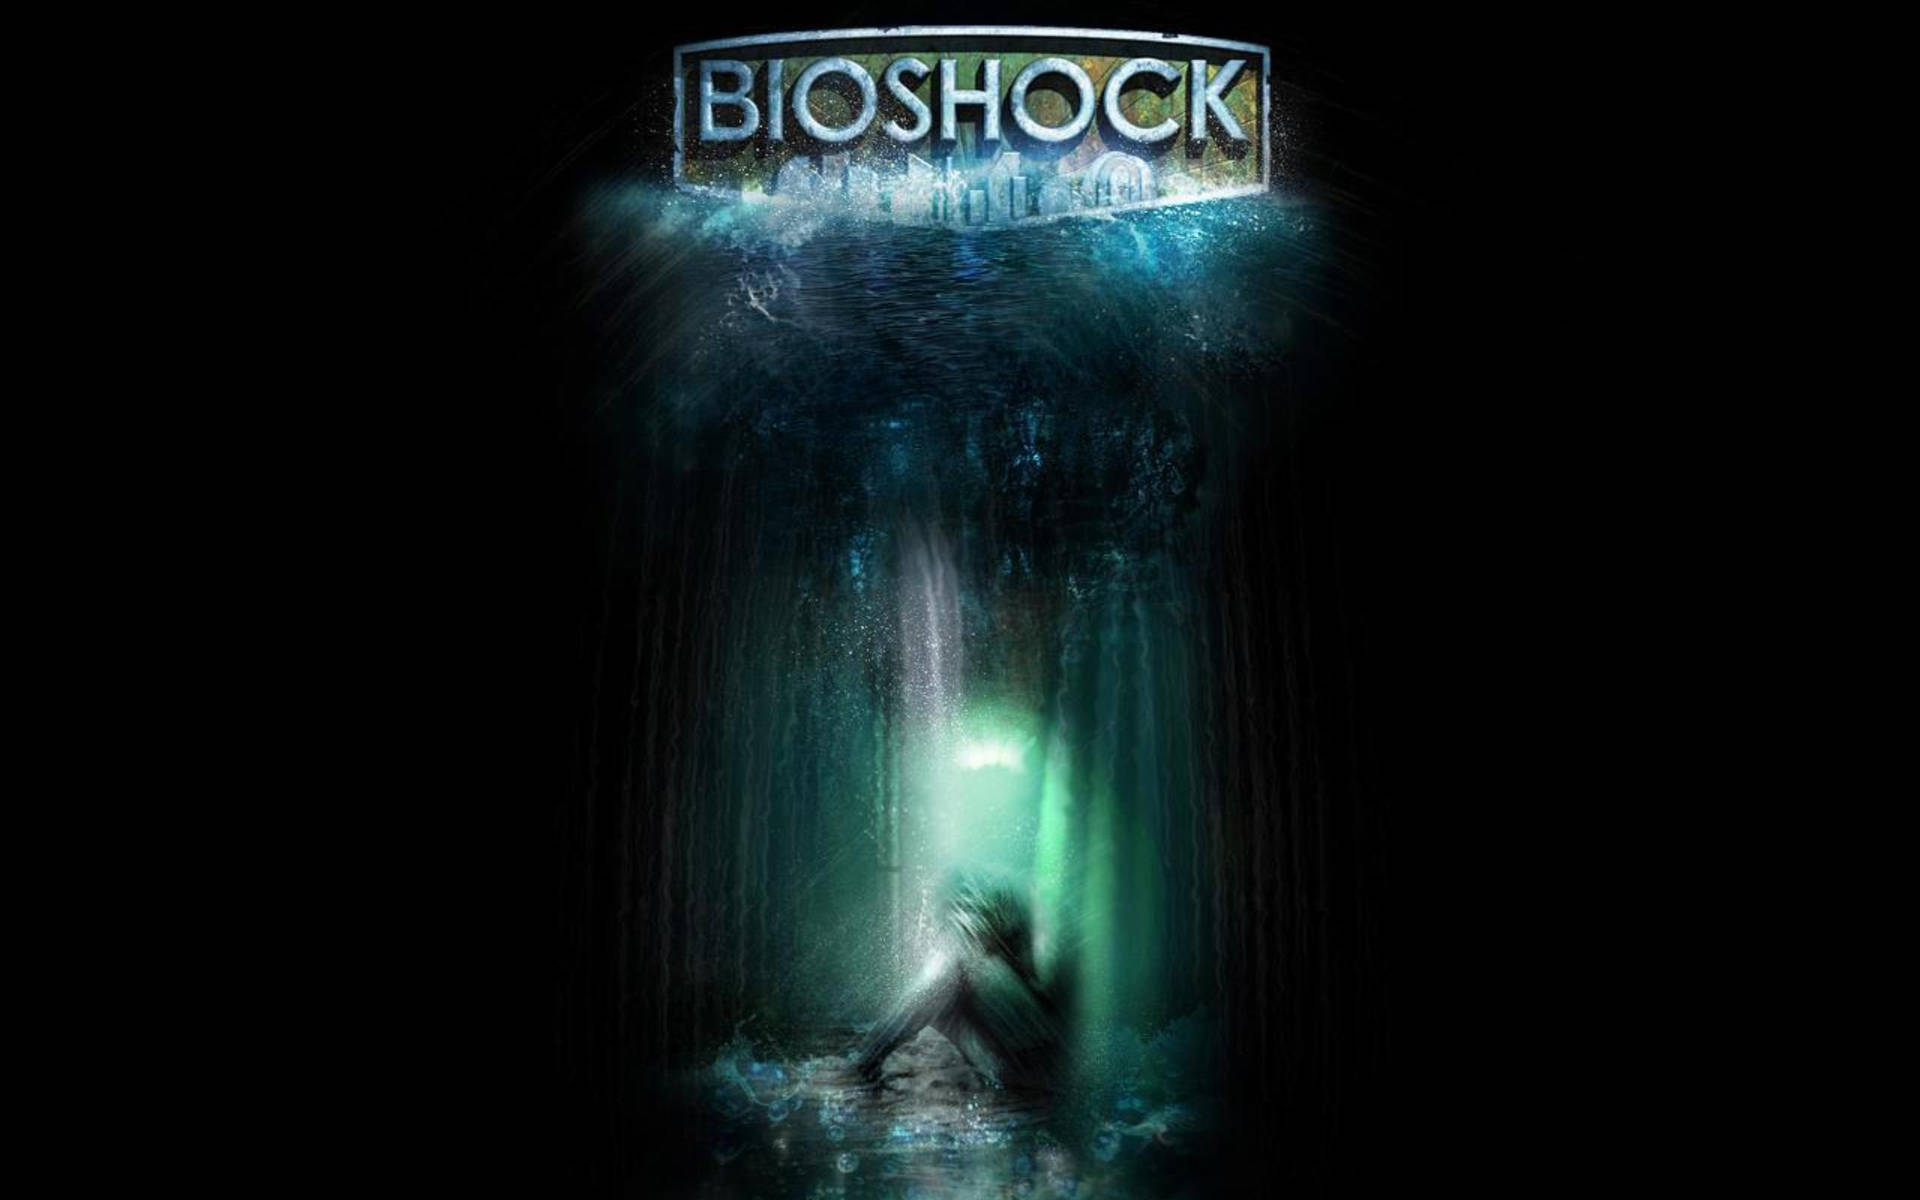 Bioshock4k Underwater Translates To Bioshock 4k Undervatten In Swedish. Wallpaper